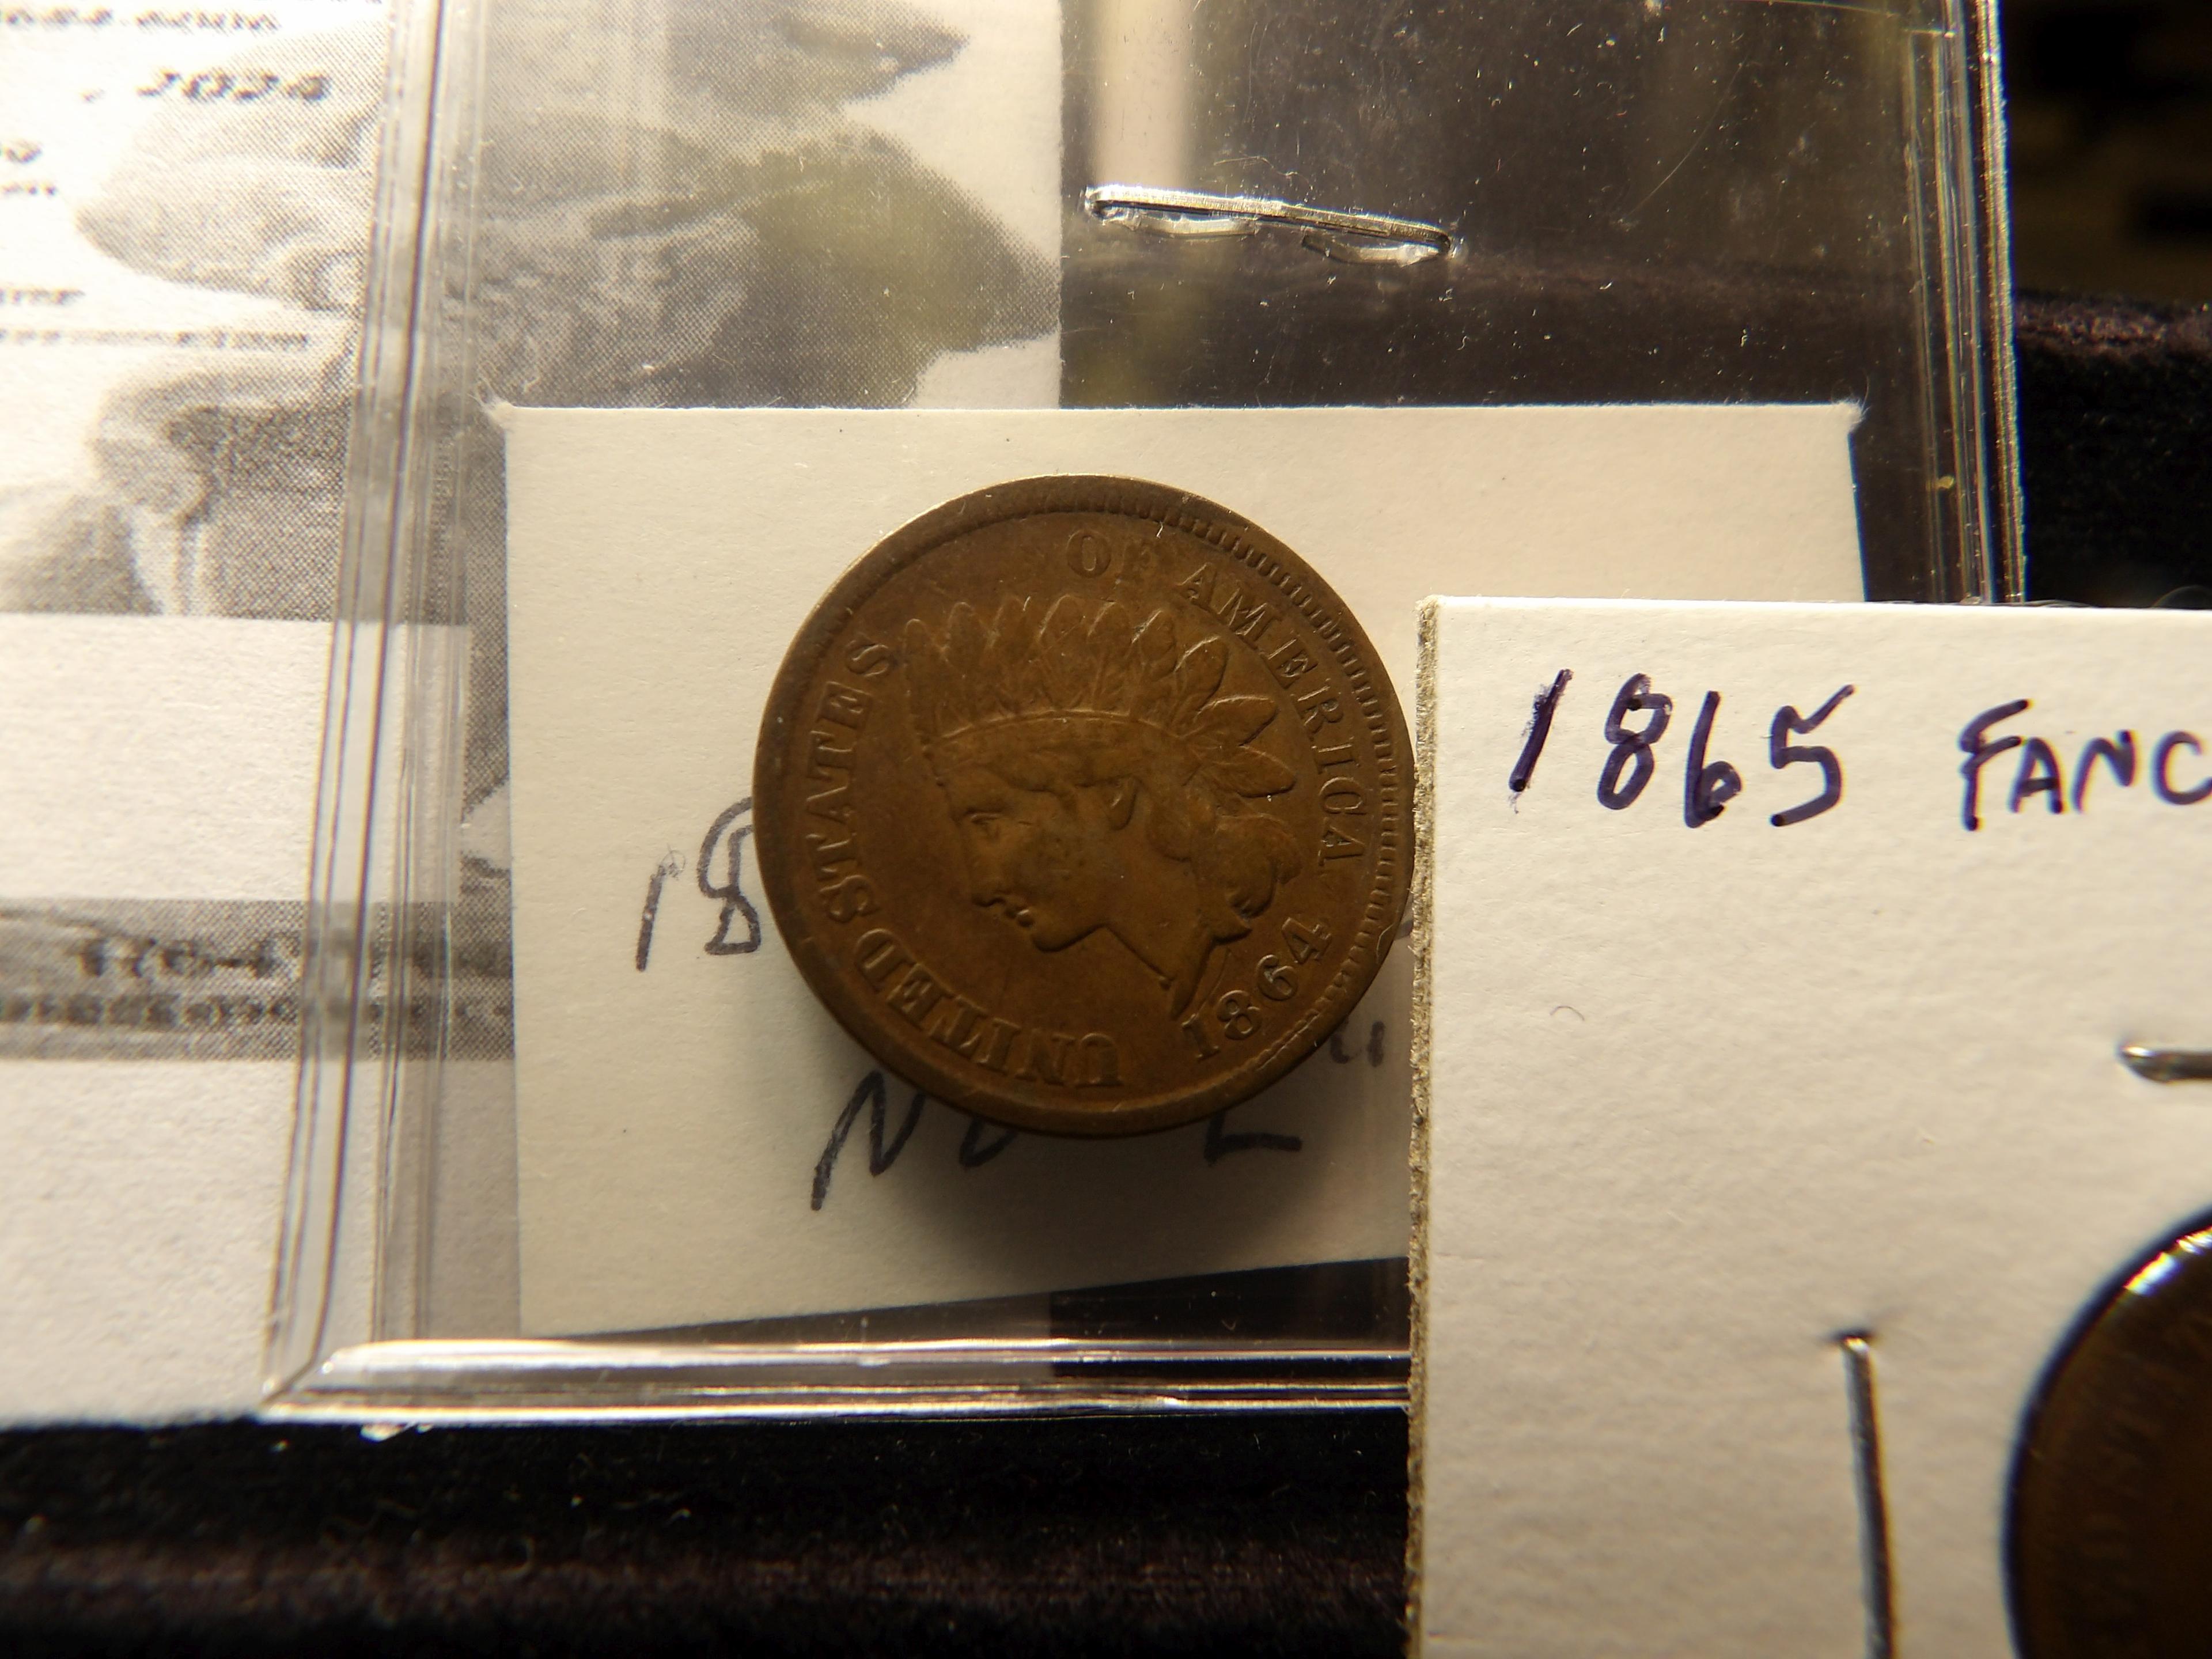 1864 Copper-nickel VG, 1864 Bronze No L, VF, & 1865 fancy 5, fine.